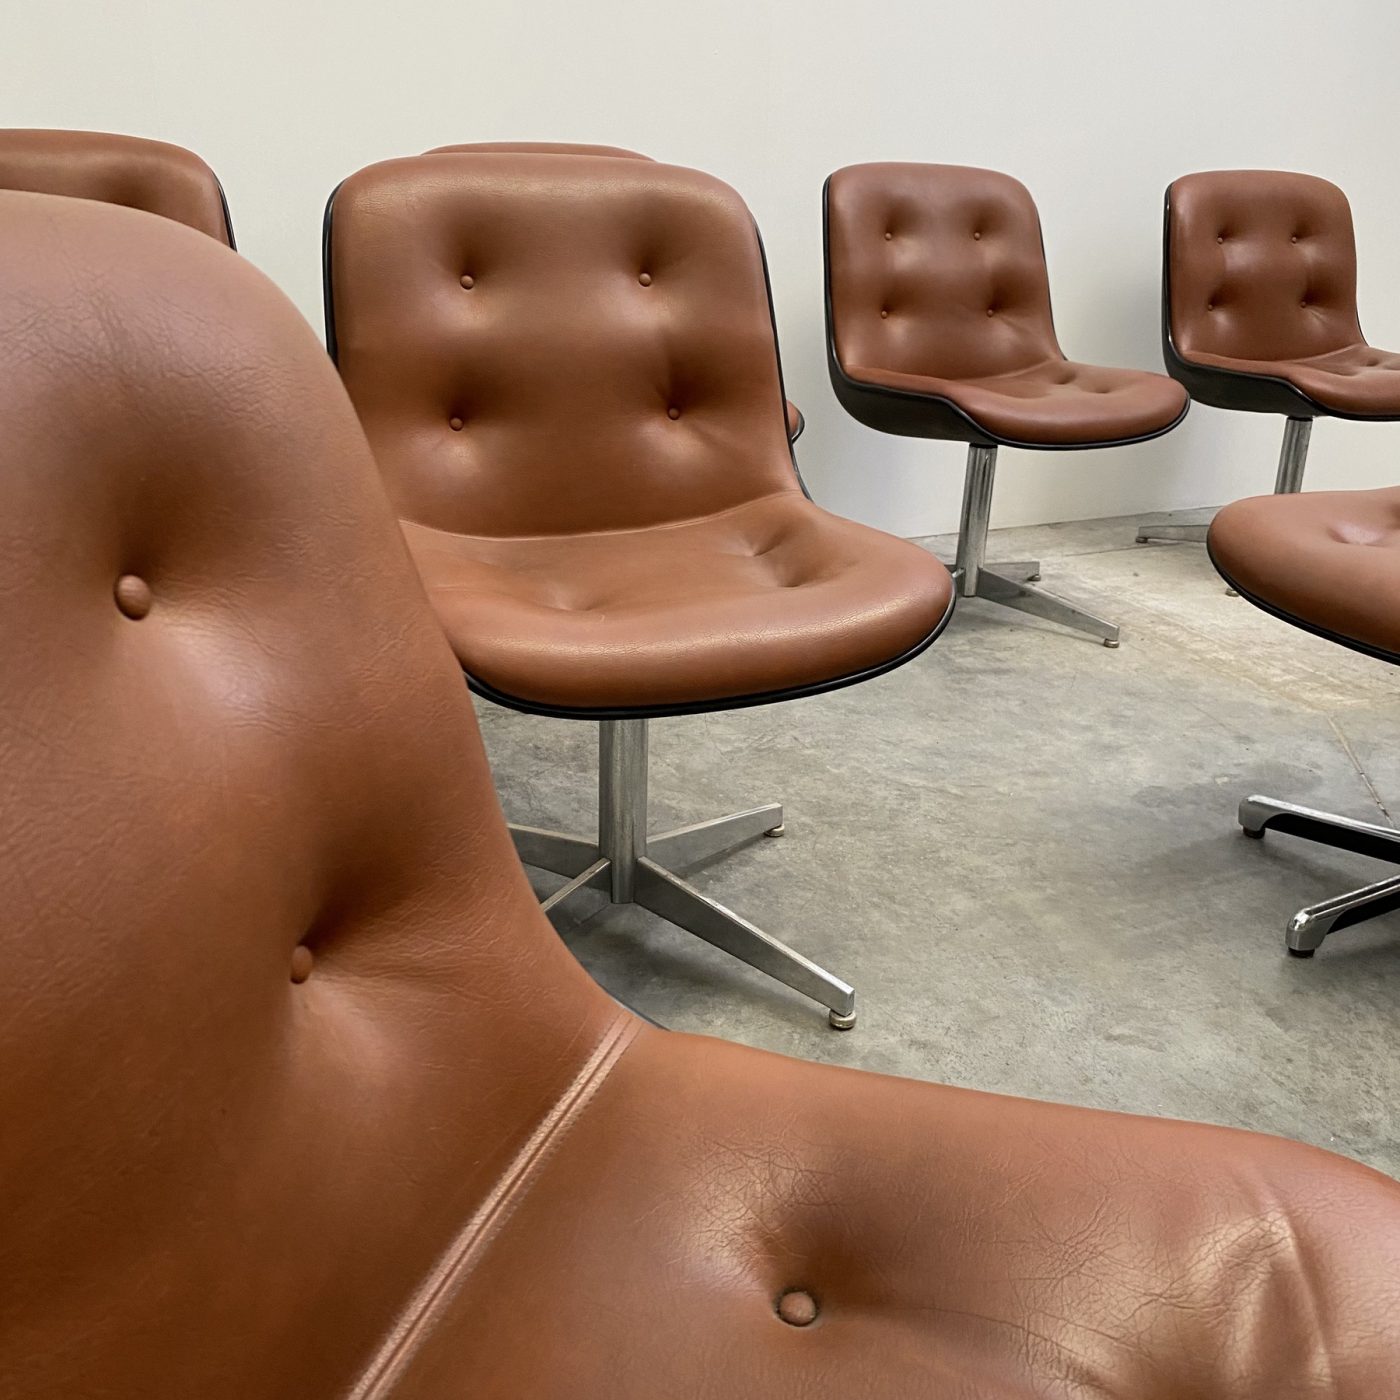 objet-vagabond-vintage-chairs0008